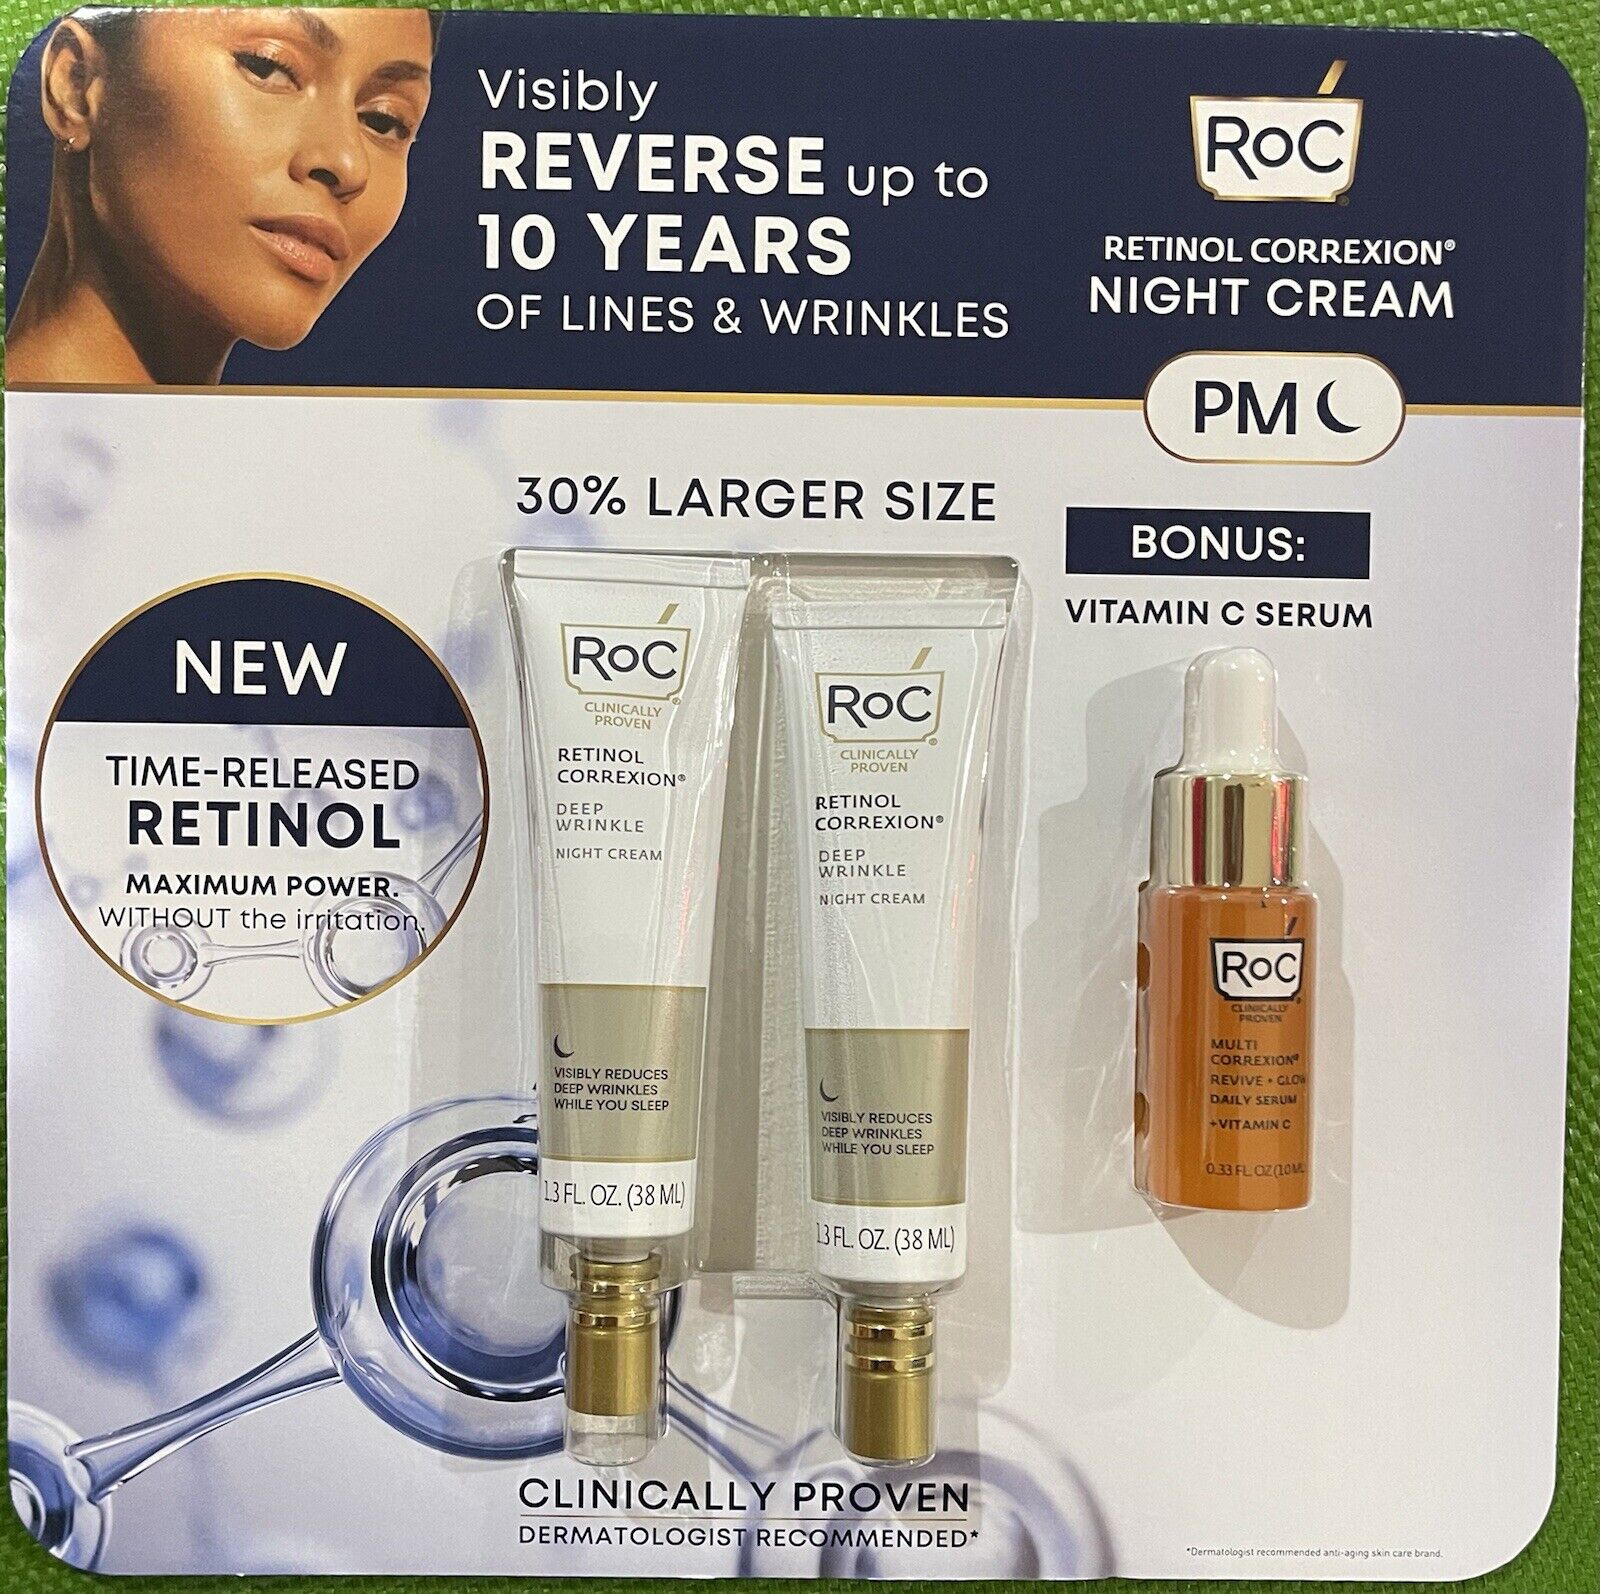 RoC Retinol Correxion Deep Wrinkle Night Cream 2x 1.3 oz + Bonus Vitamin C Serum